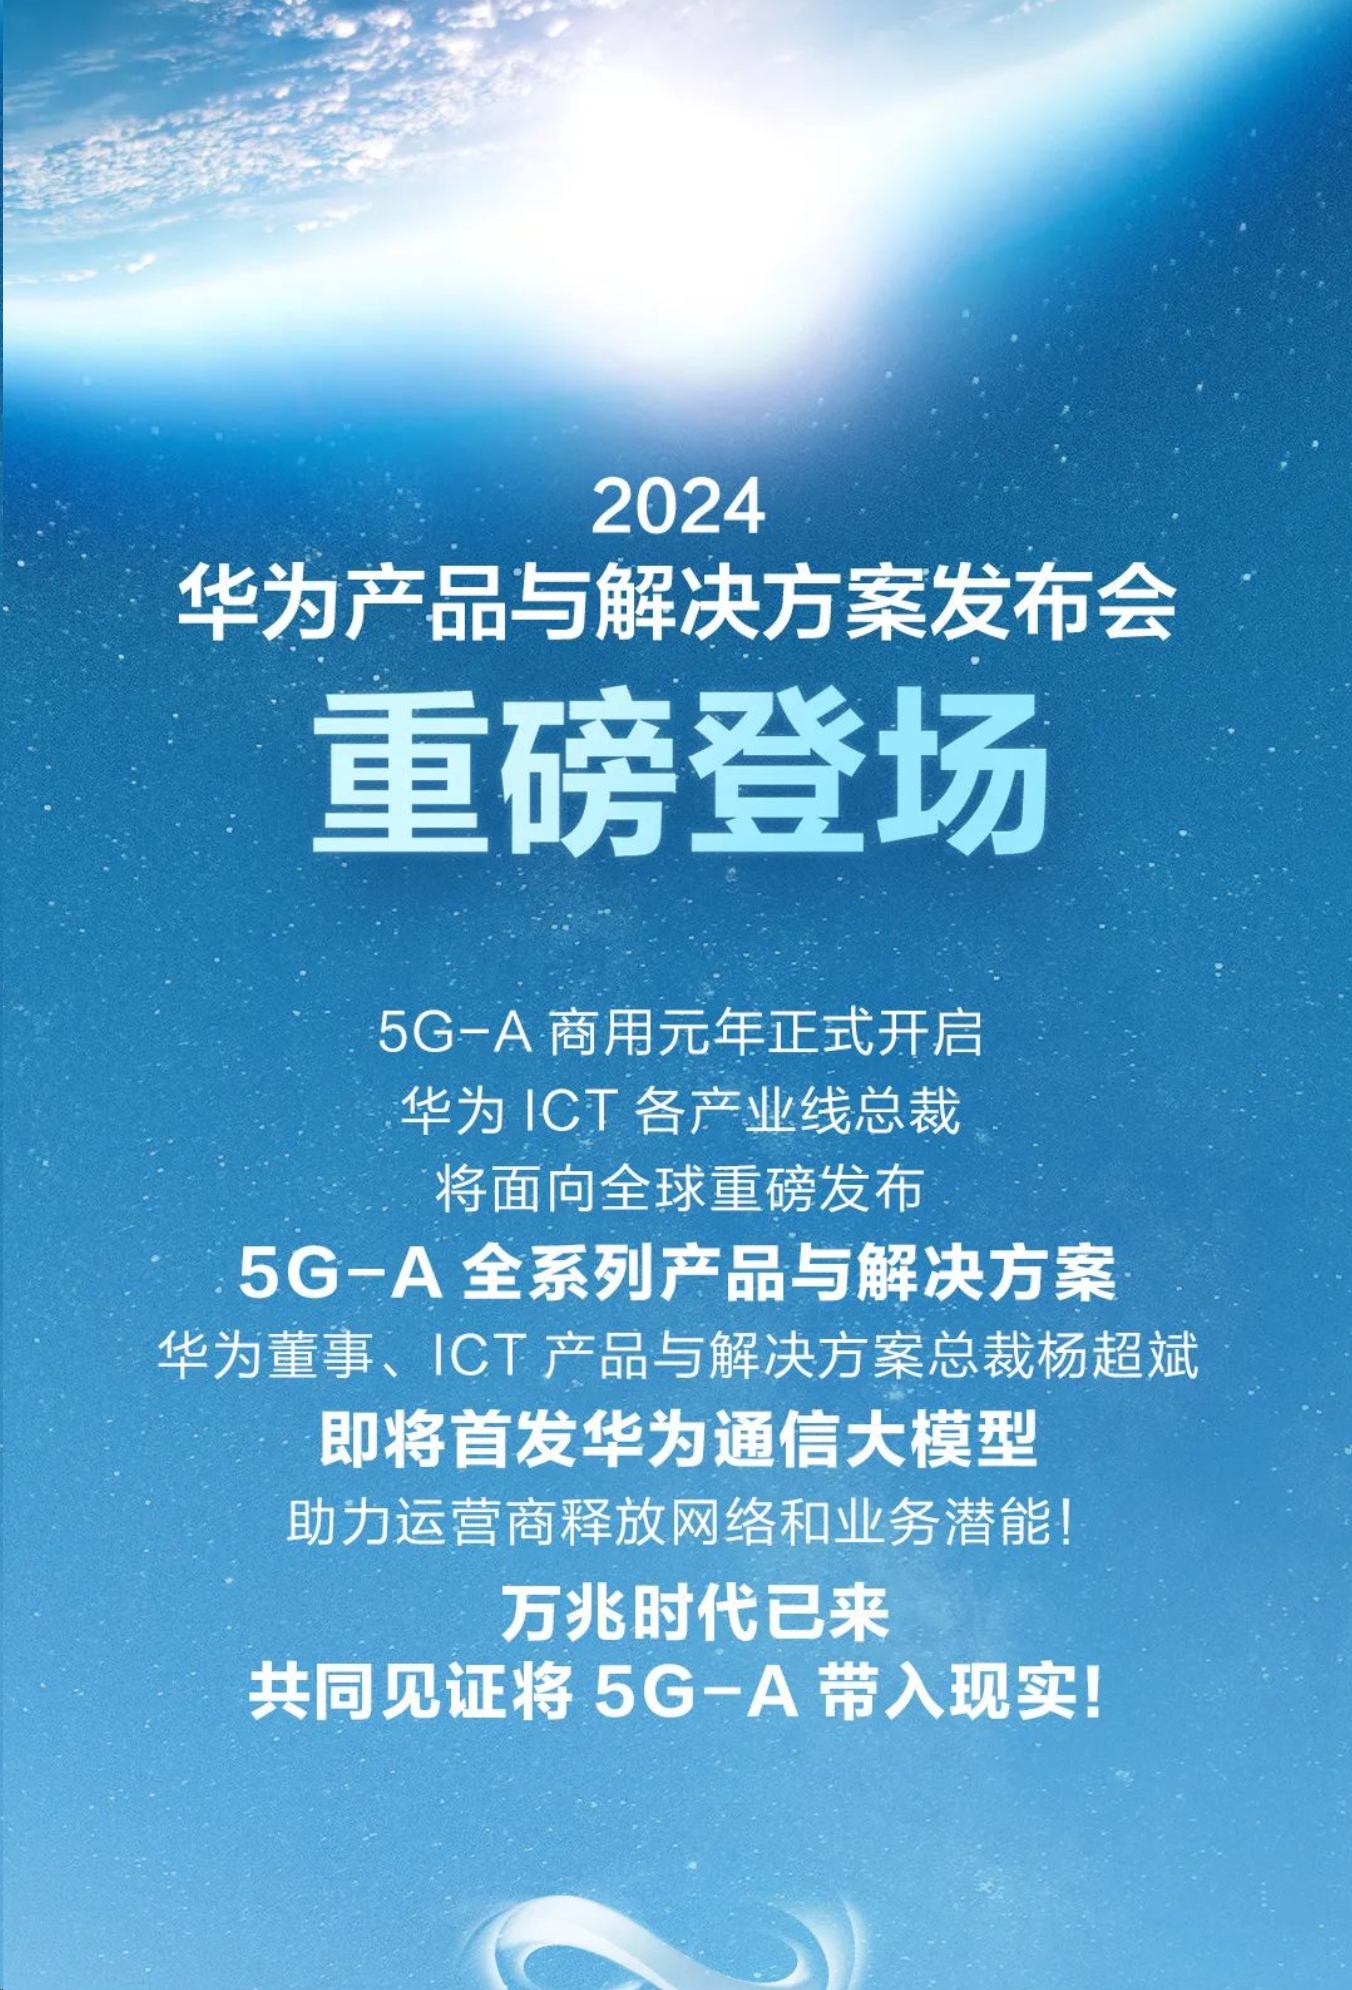 5G网络改变生活，华为引领科技革新  第5张